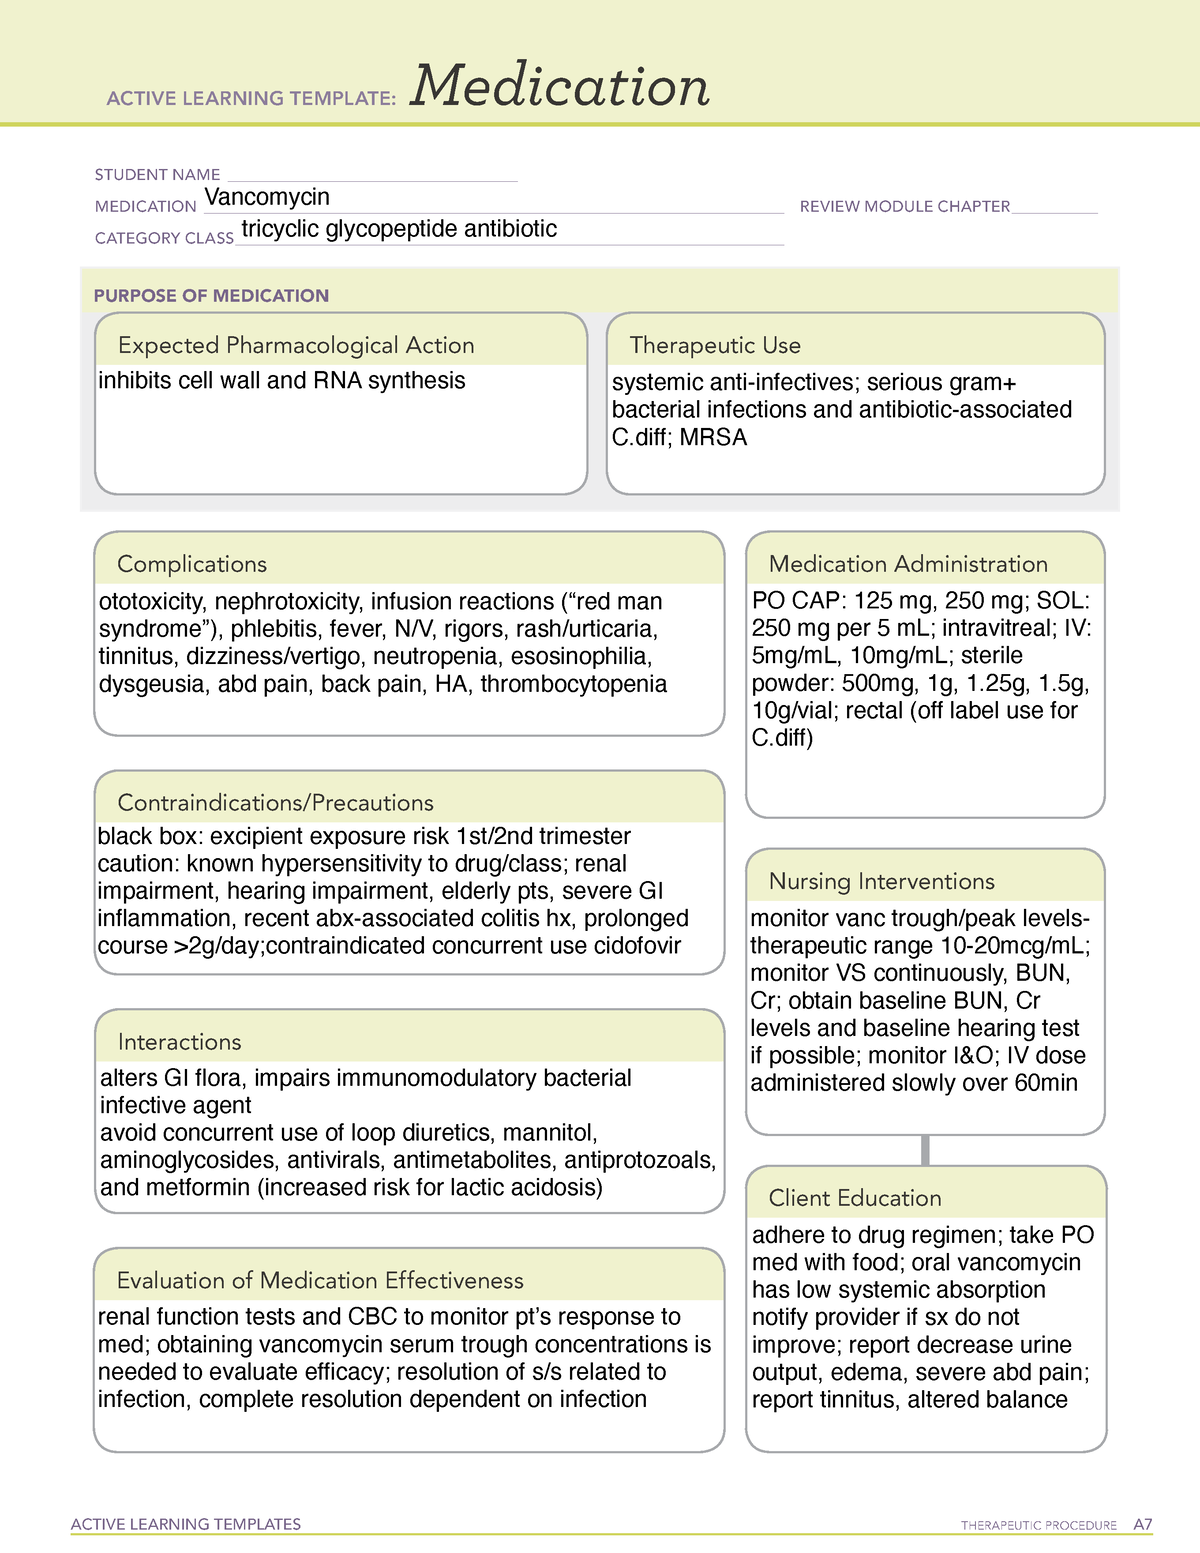 active-learning-template-medication-vancomycin-active-learning-templates-therapeutic